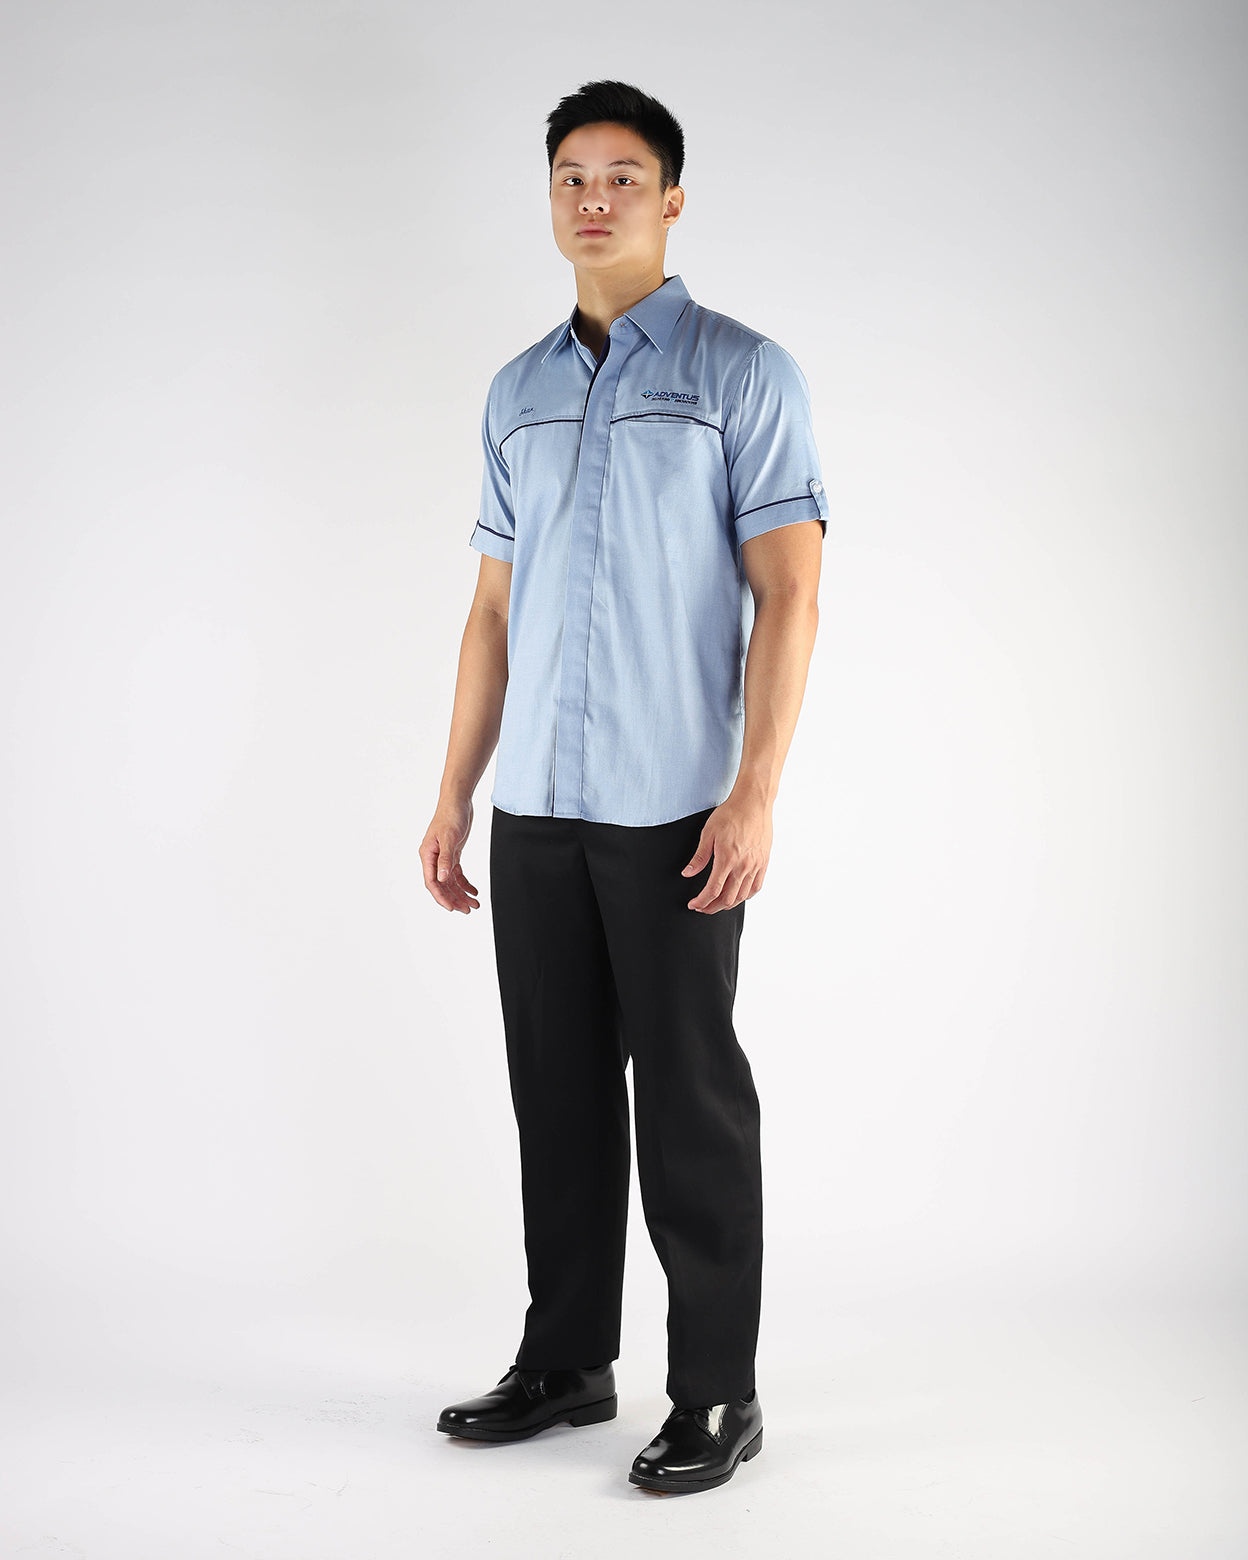 Men's Short Sleeve Shirt Uniform